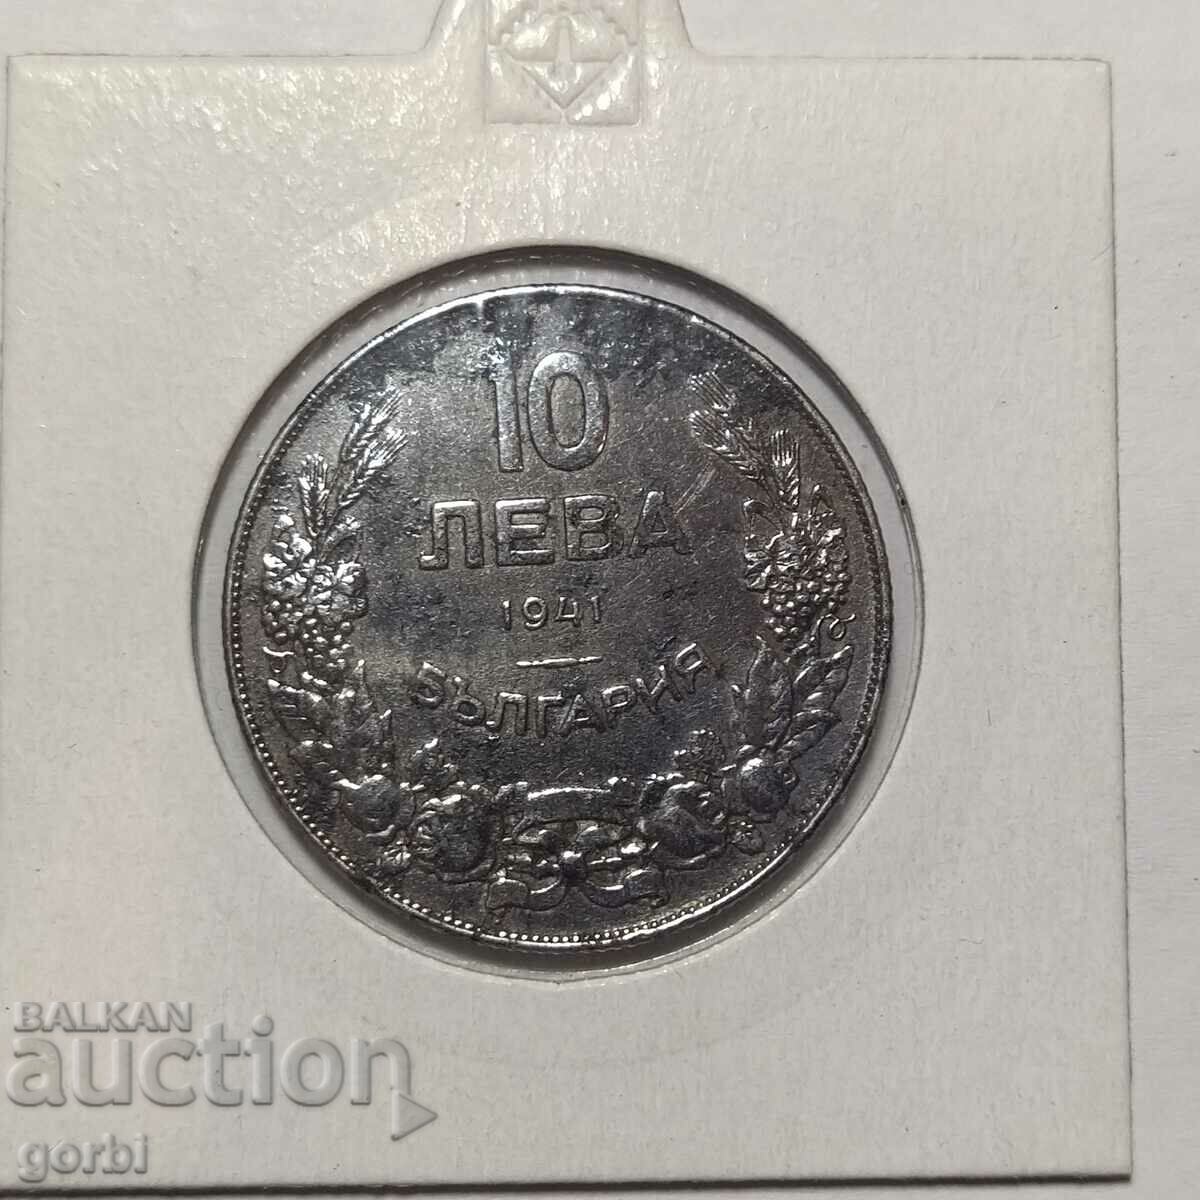 10 BGN 1941. Σπάνιο νόμισμα με εξαιρετικό ανάγλυφο!